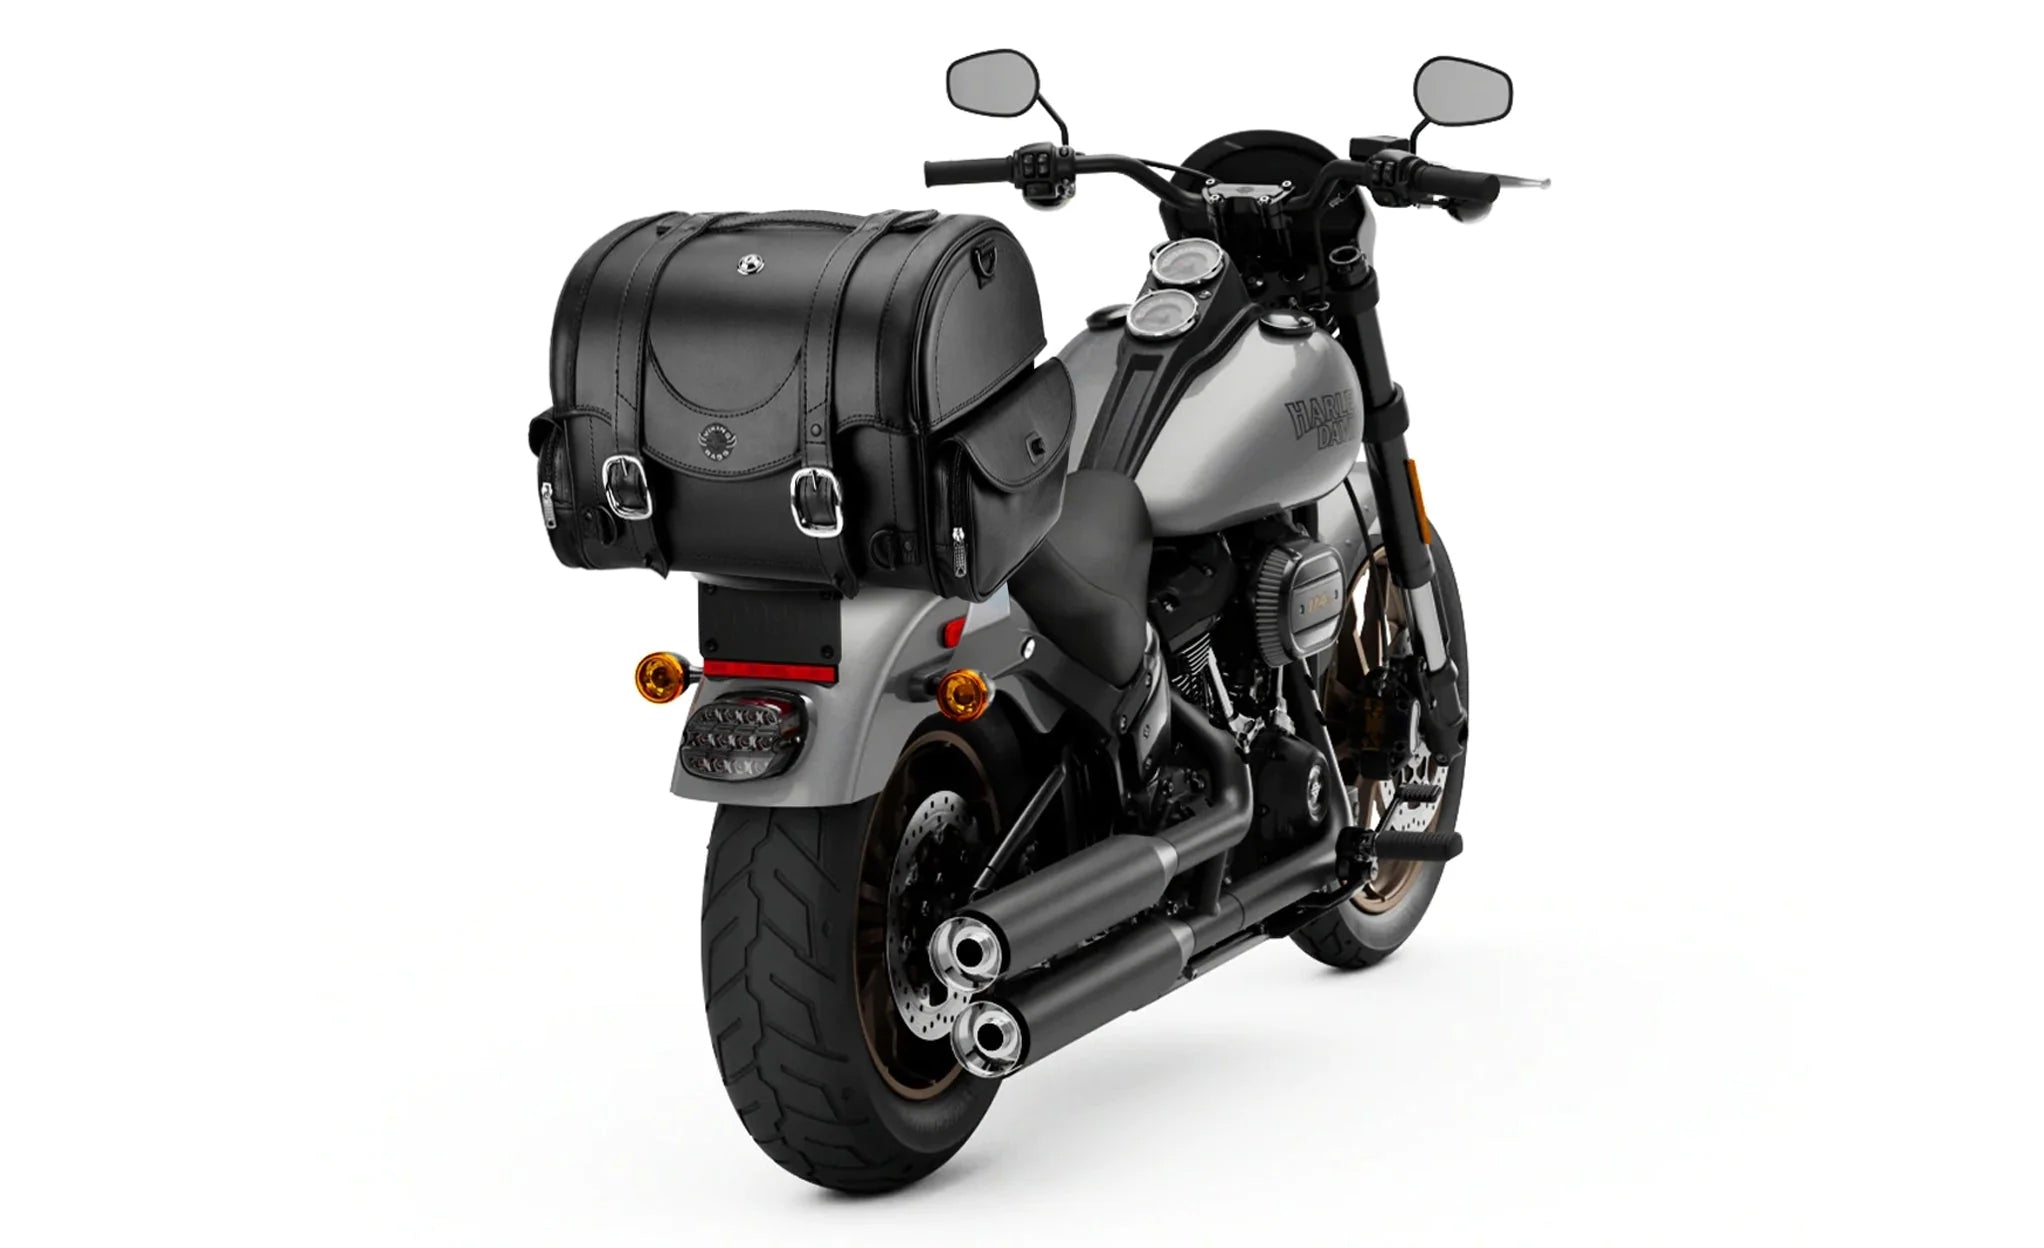 21L - Century Medium Suzuki Leather Motorcycle Tail Bag on Bike Photo @expand